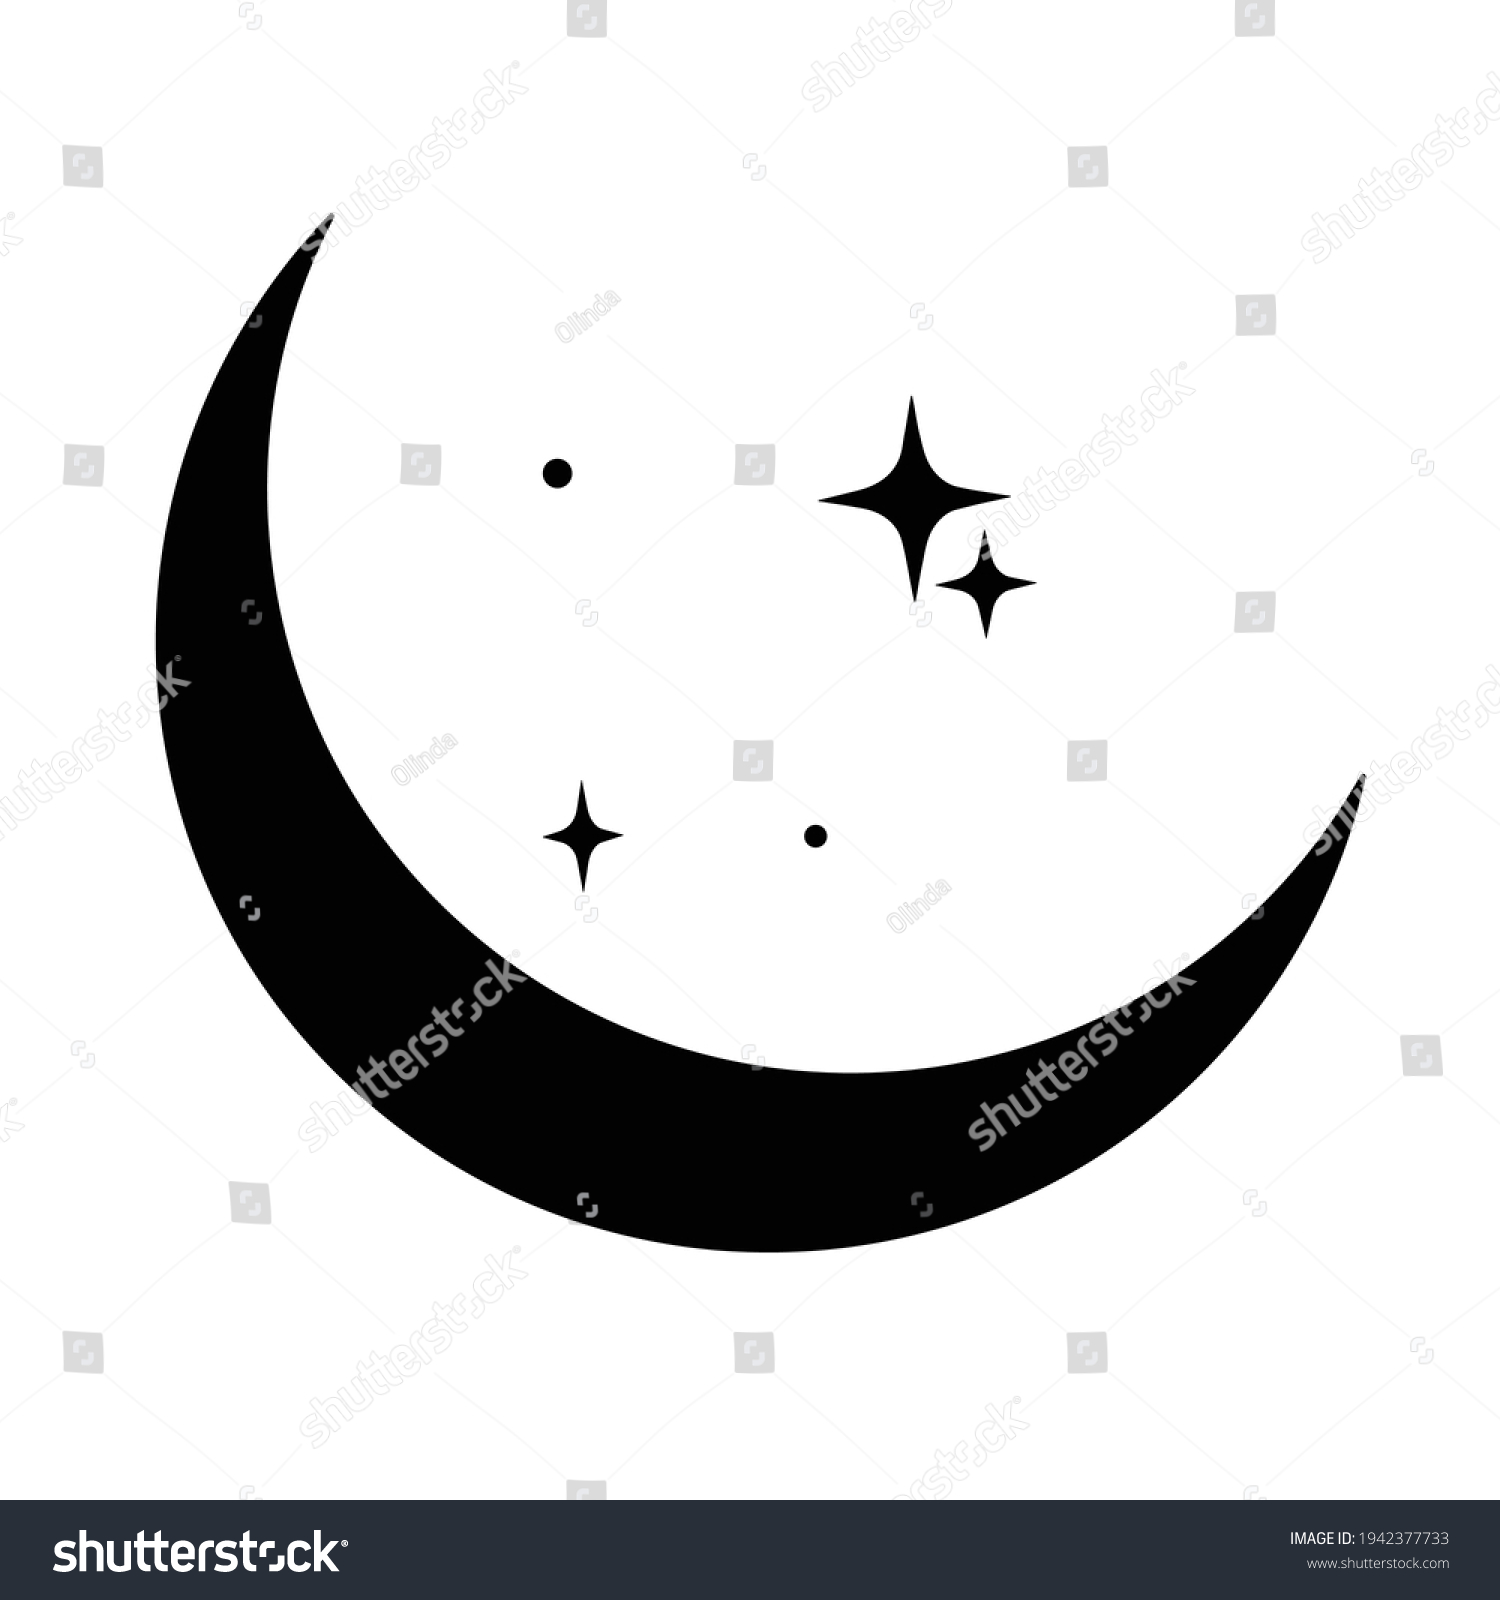 SVG of Black crescent moon with stars. islamic religious symbol. Design element for logos icons. Vector illustration. Modern Boho style art svg